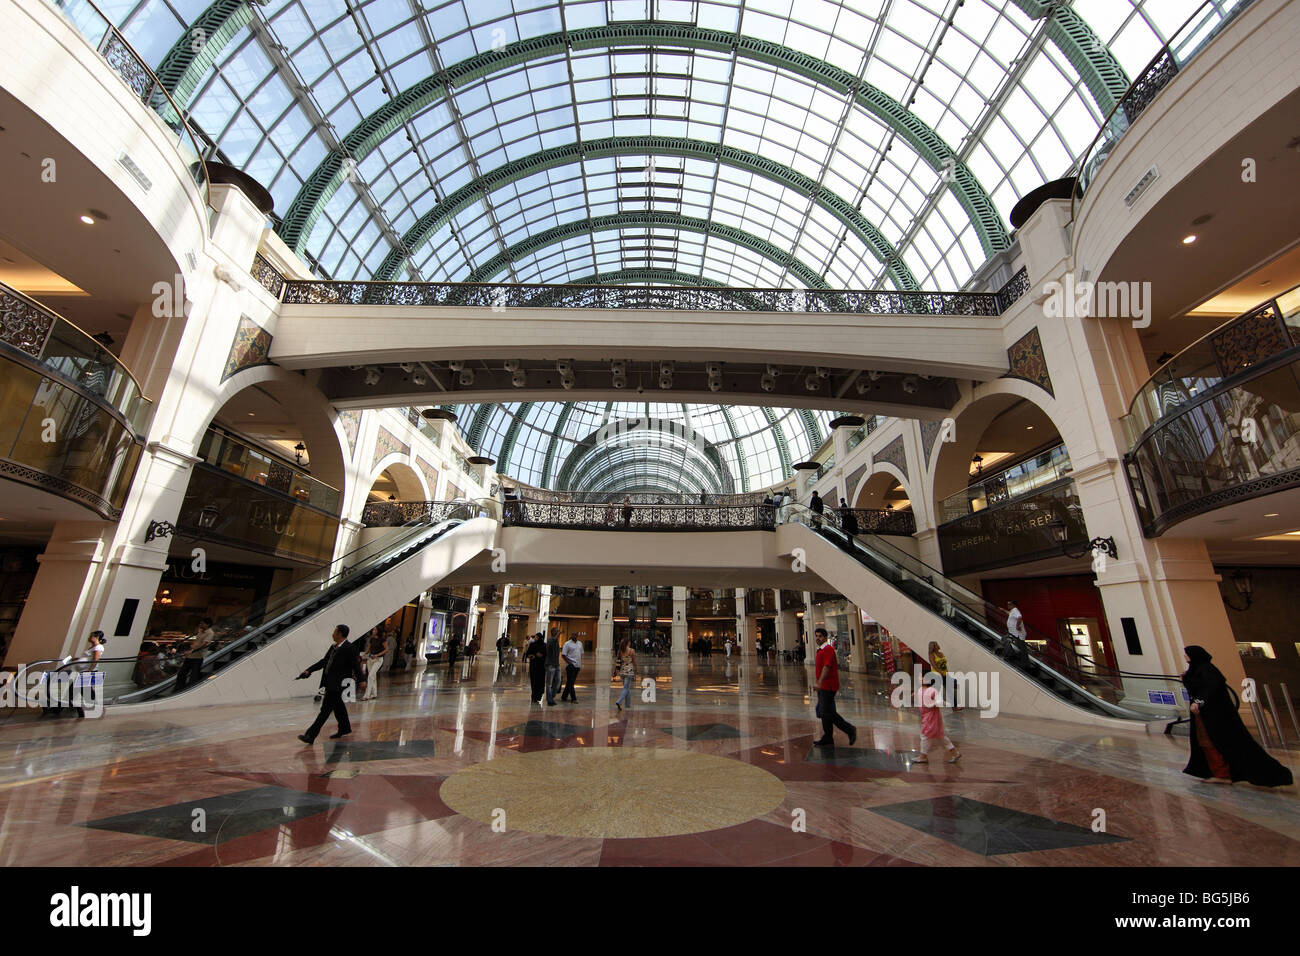 The interior of the Mall of the Emirates, Dubai, United Arab Emirates Stock Photo